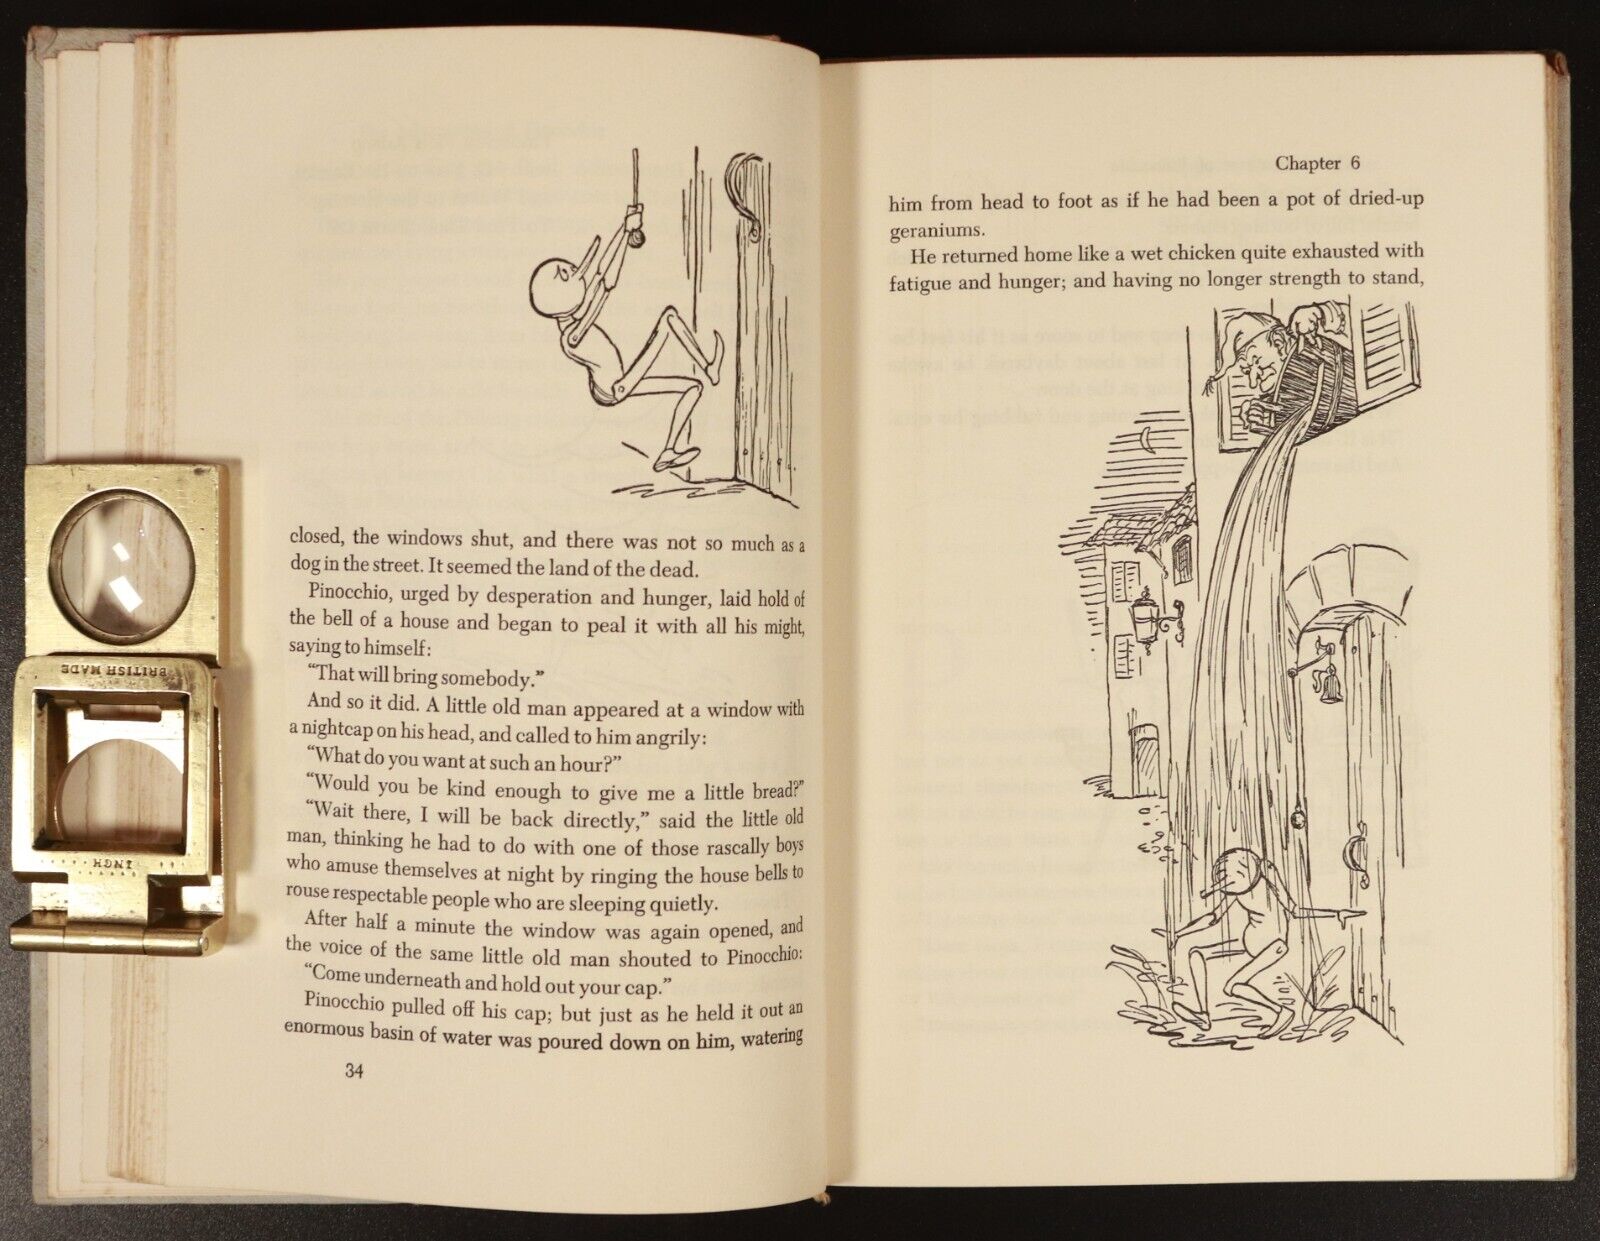 1955 The Adventures Of Pinocchio Carlo Collodi Vintage Classic Childrens Book